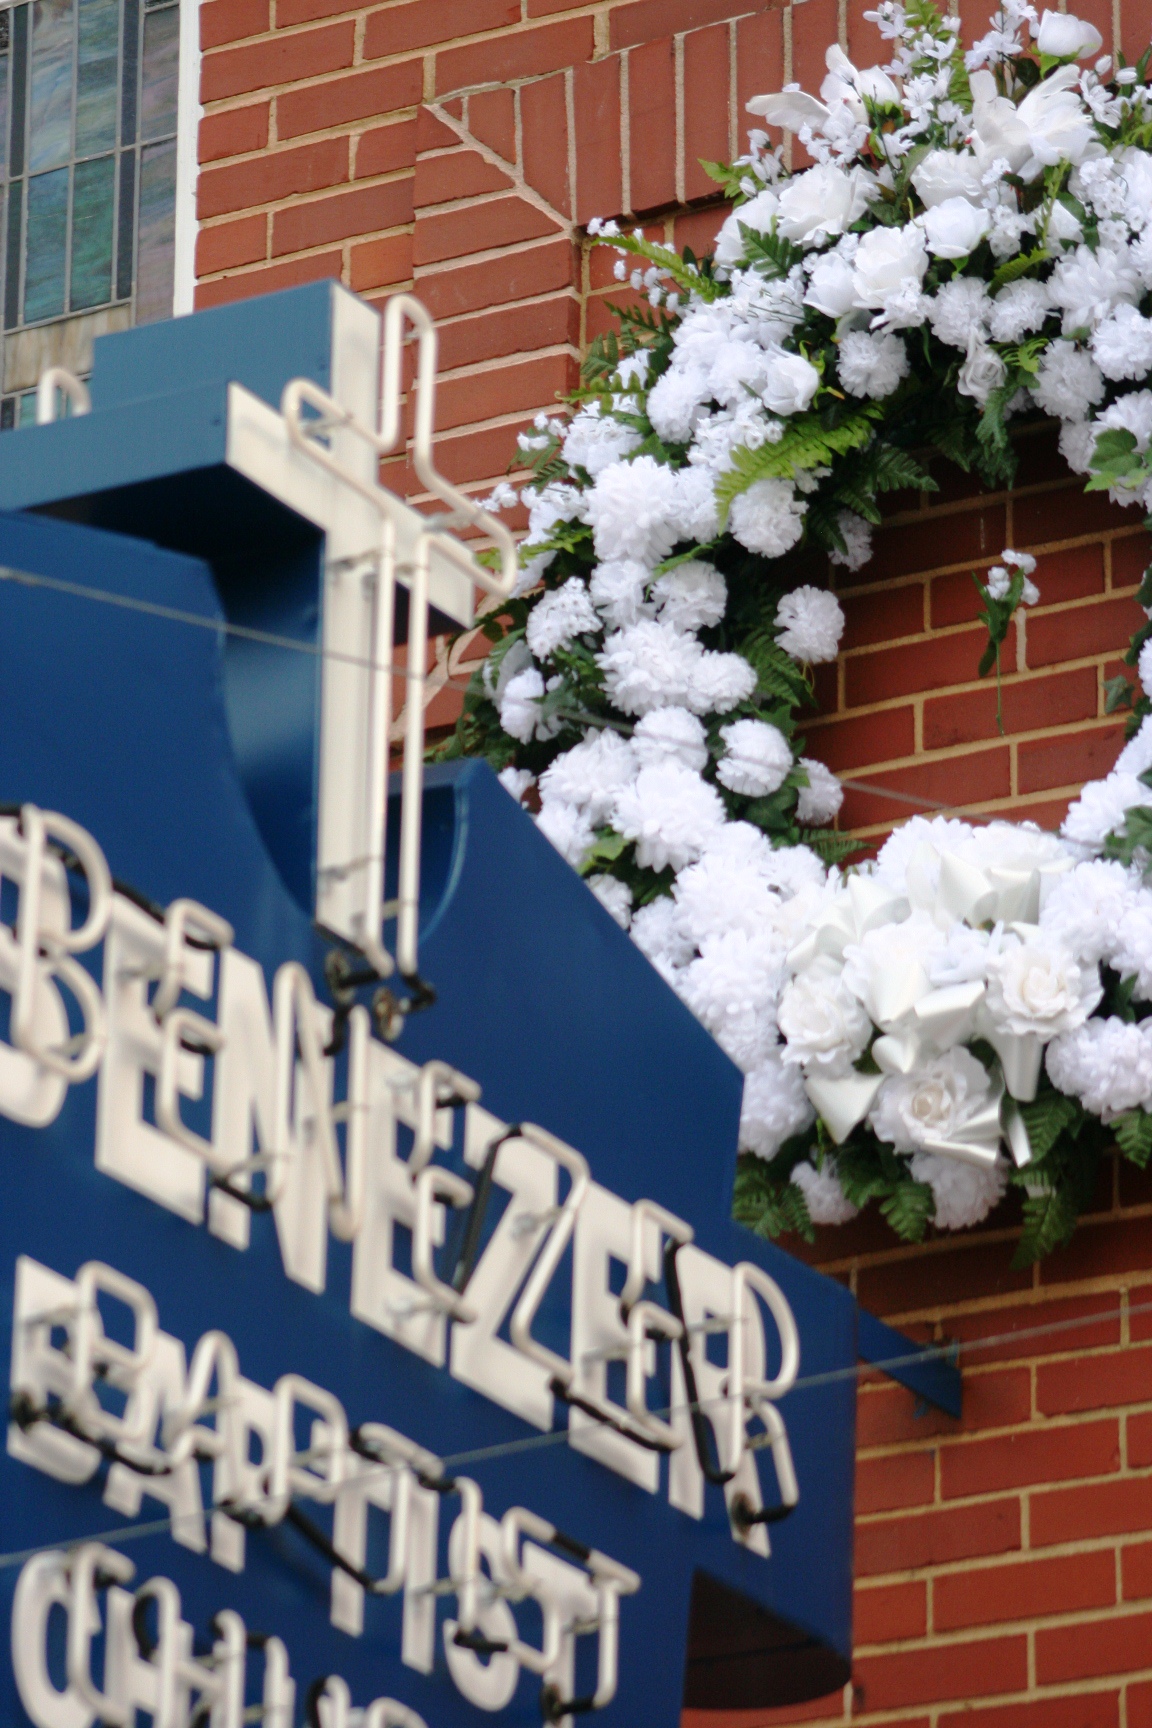 Remembrance wreath mounted on exterior of Historic Ebenezer Baptist Church.